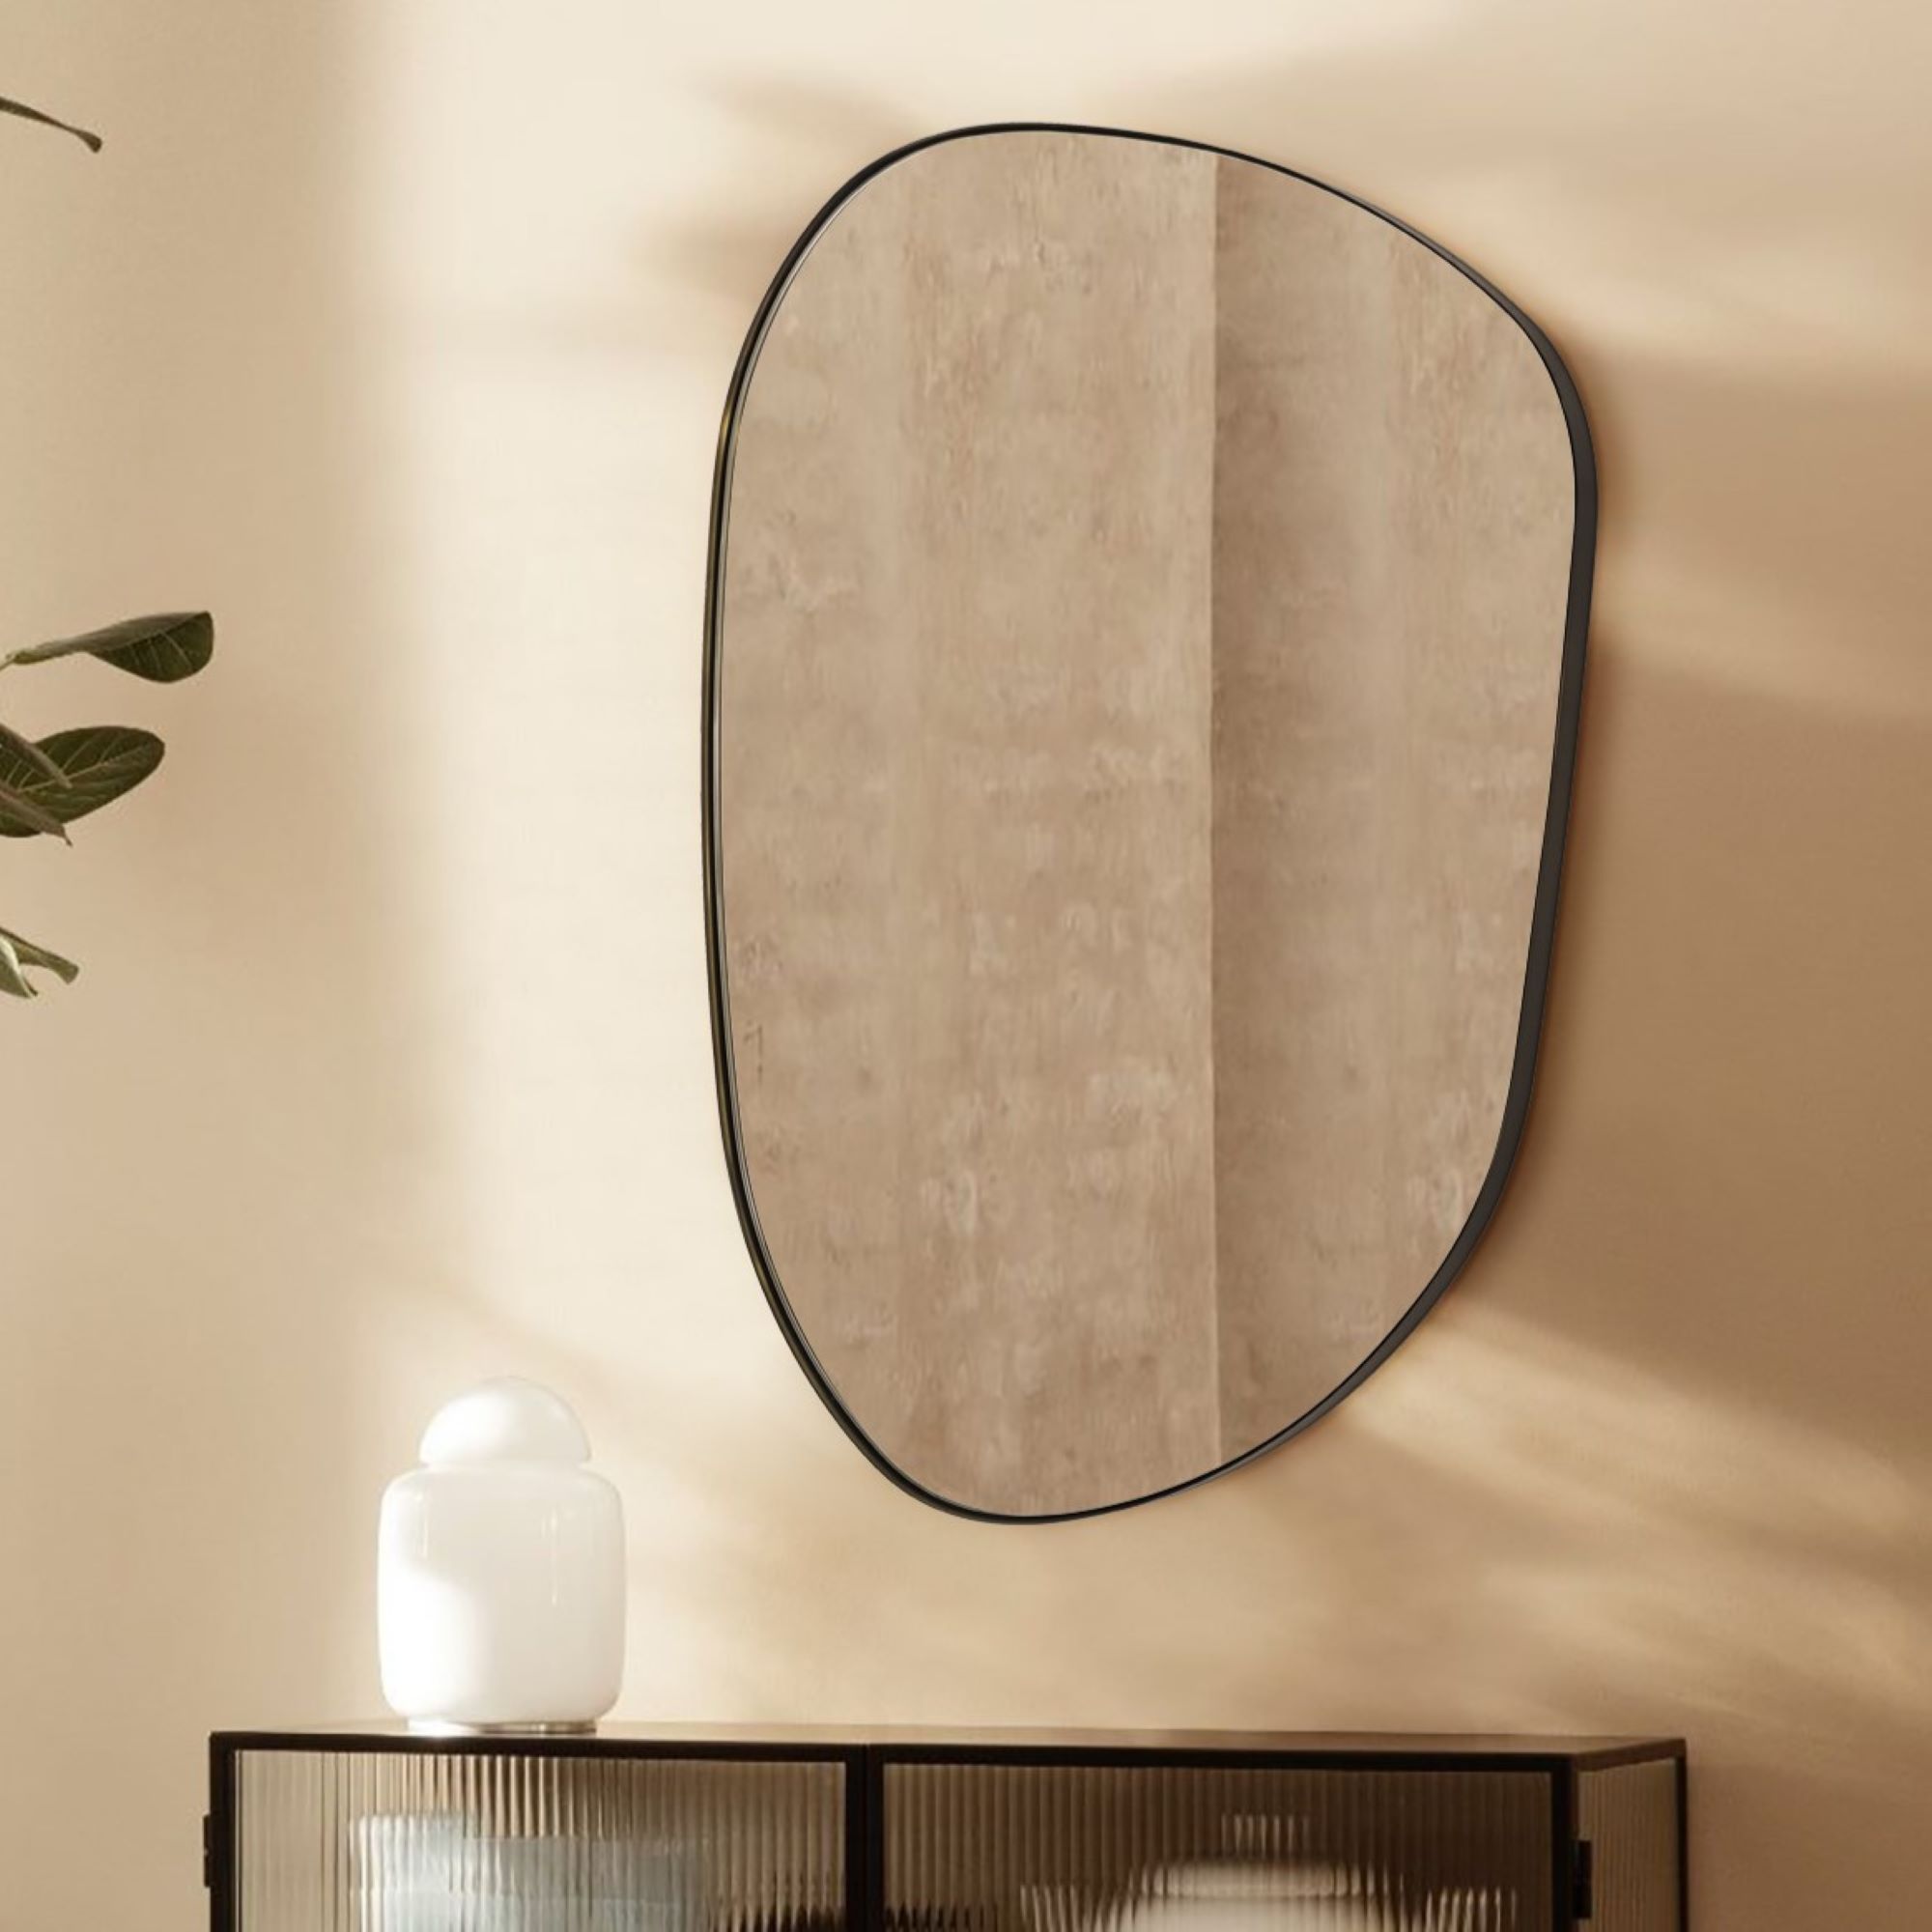 Bertlinde asymmetrical wall mirror irregular shaped mirror for living room, bathroom or entry-30x40-Black